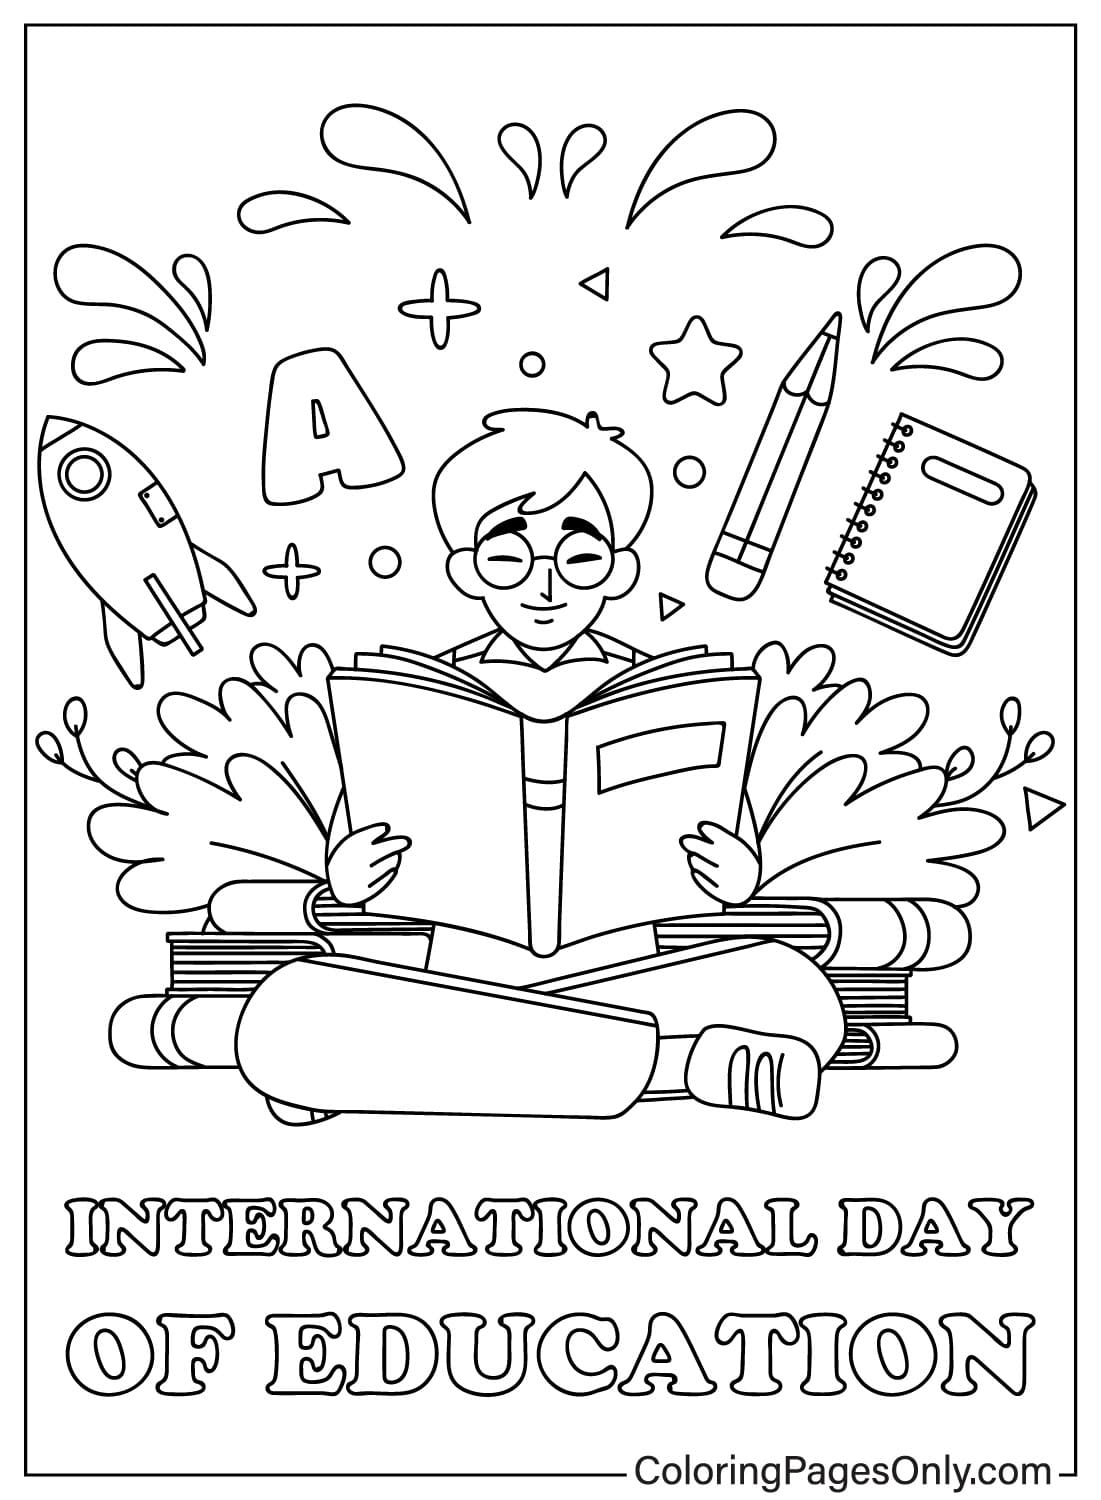 Printable International Day of Education Coloring Page from International Day of Education